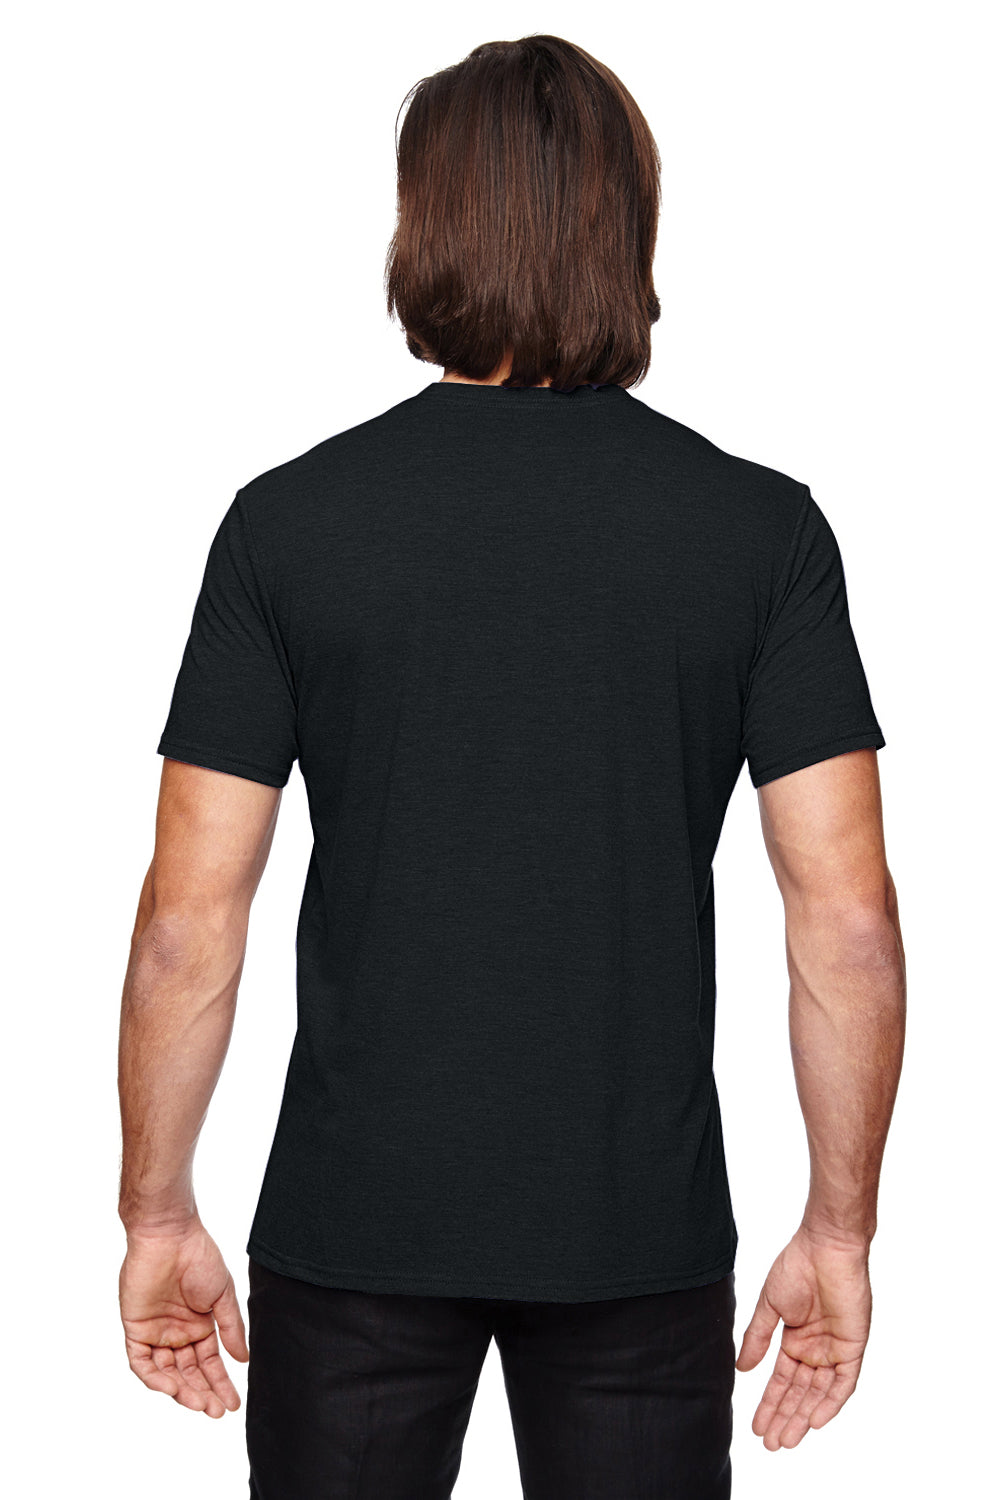 Anvil 6750 Mens Short Sleeve Crewneck T-Shirt Black Back